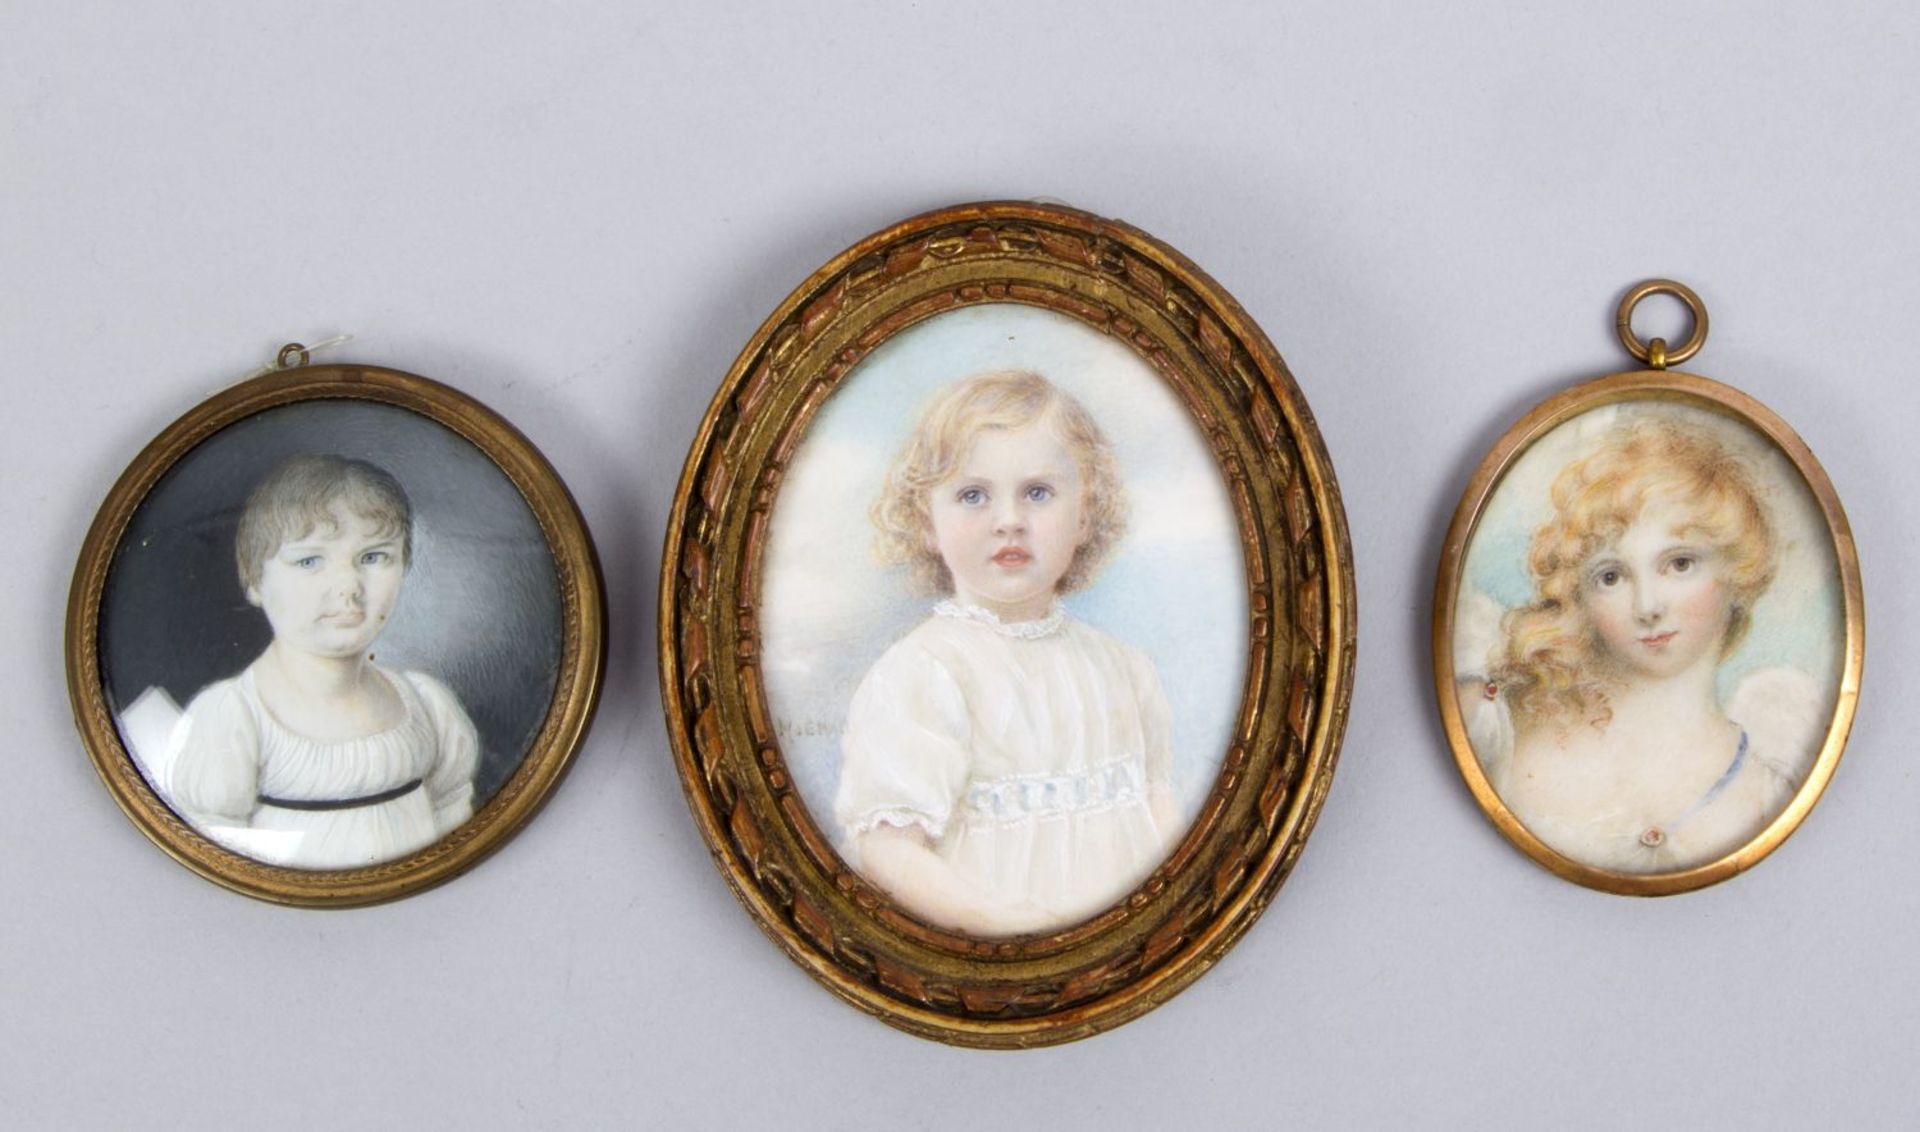 Unbekannt, Ende 19. Jh. Kinderportraits. 3 Miniaturmalereien. Bis 7 x 5,5 cm.